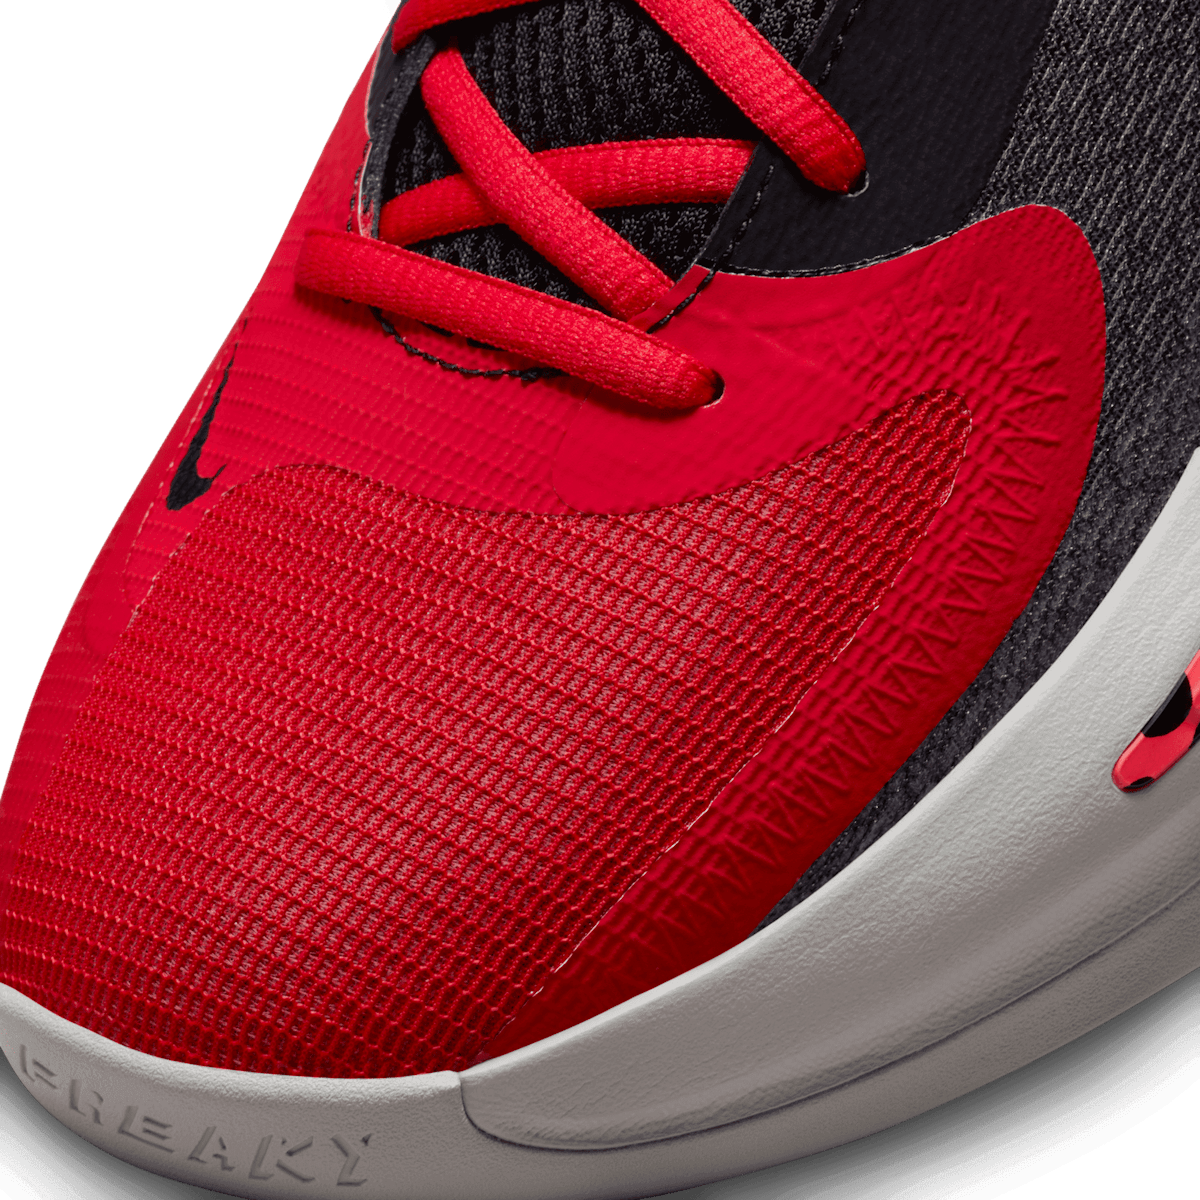 Nike Zoom Freak 4 "Safari" Basketball Shoes in Red Angle 4